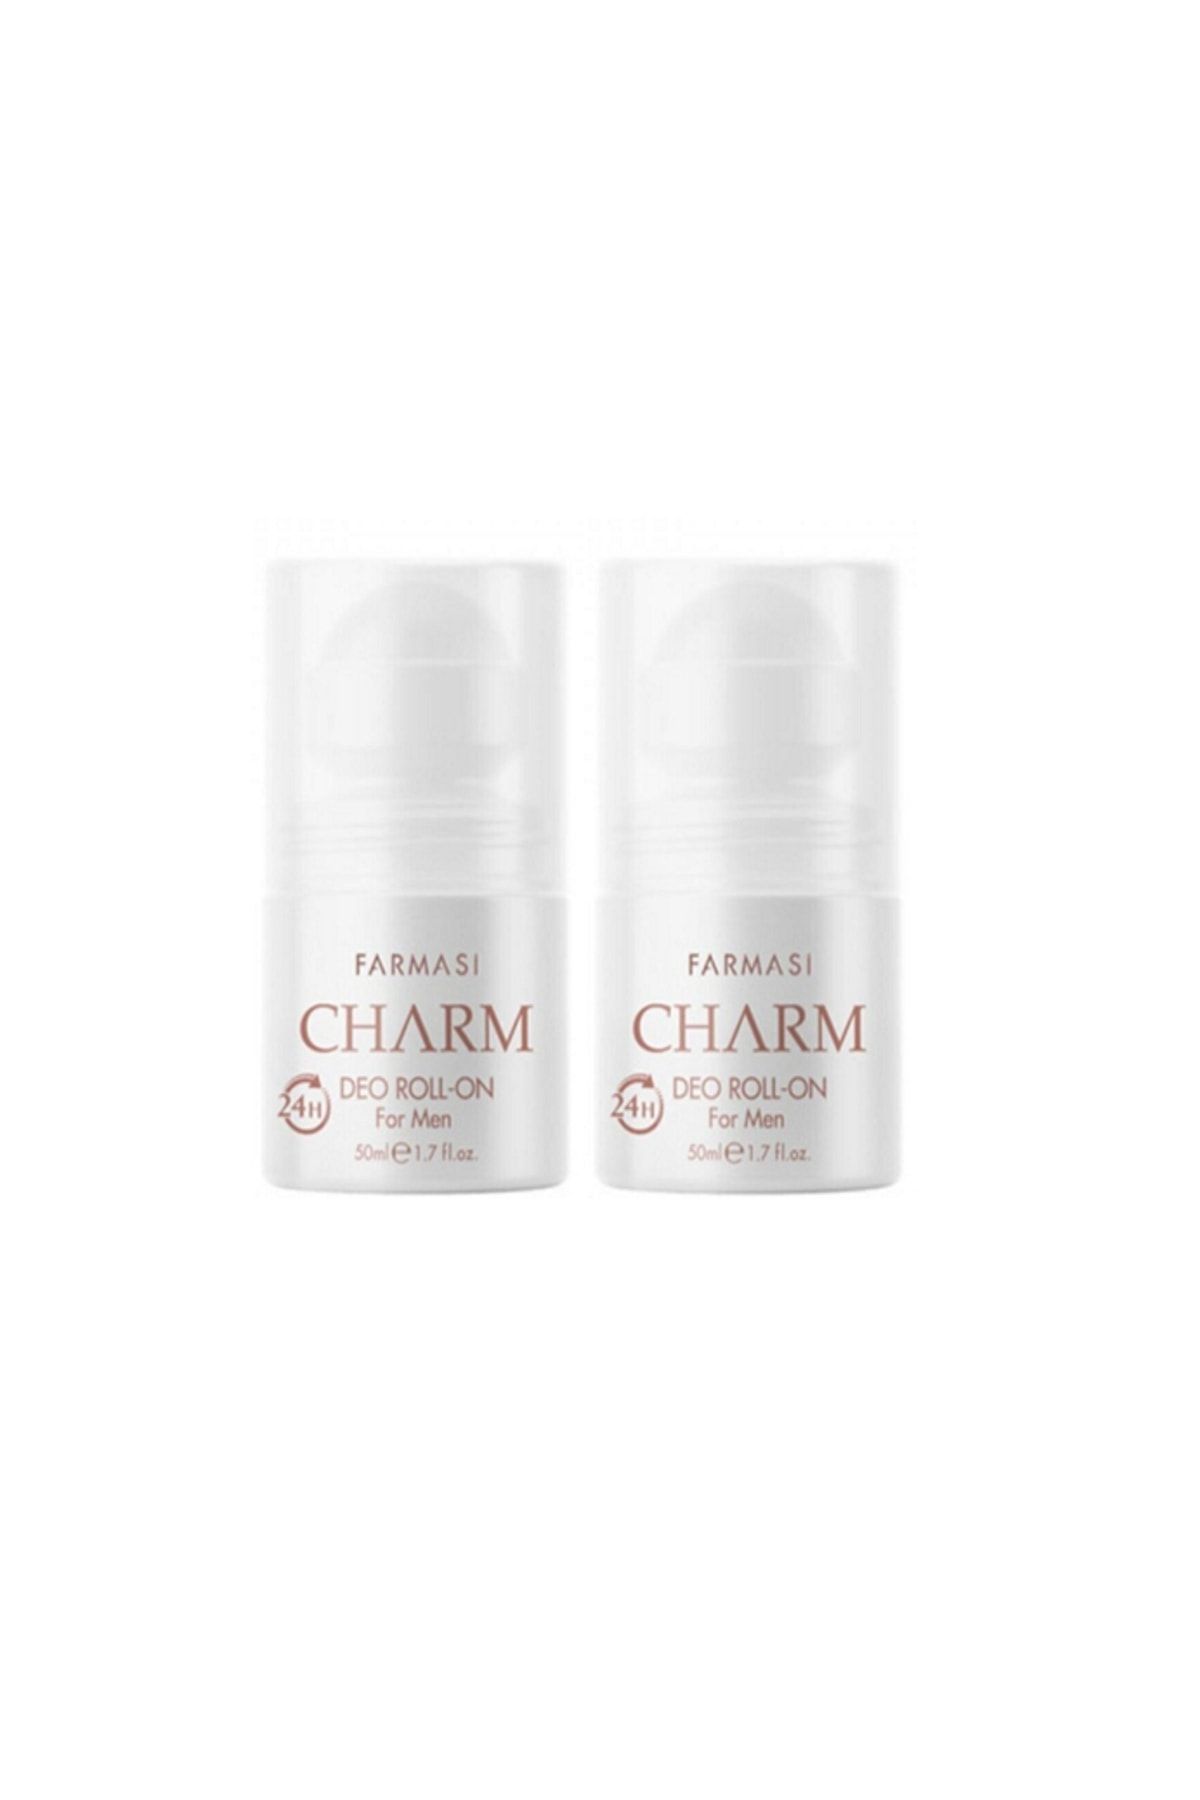 Farmasi Charm Deo Roll-On For Men - 50 ml x 2 Adet